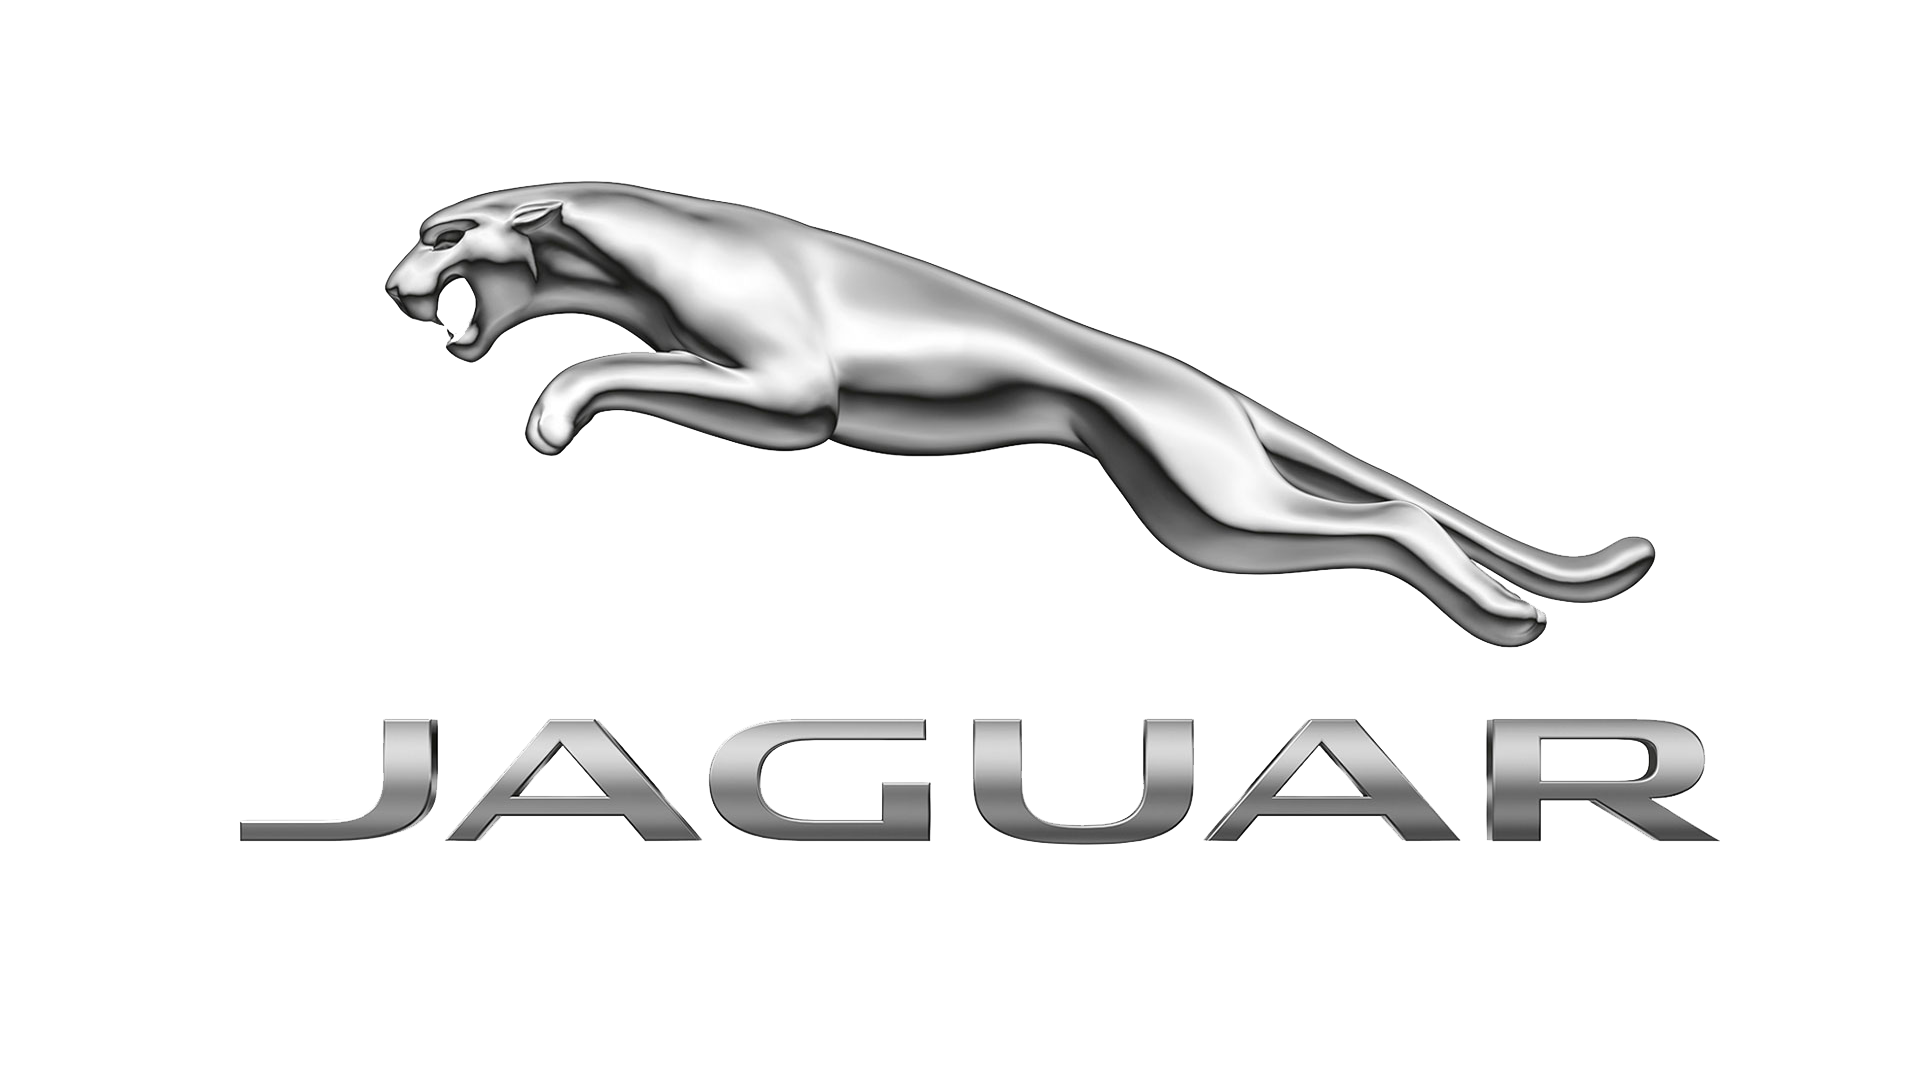 Jaguar-logo-2012-1920x1080.jpg